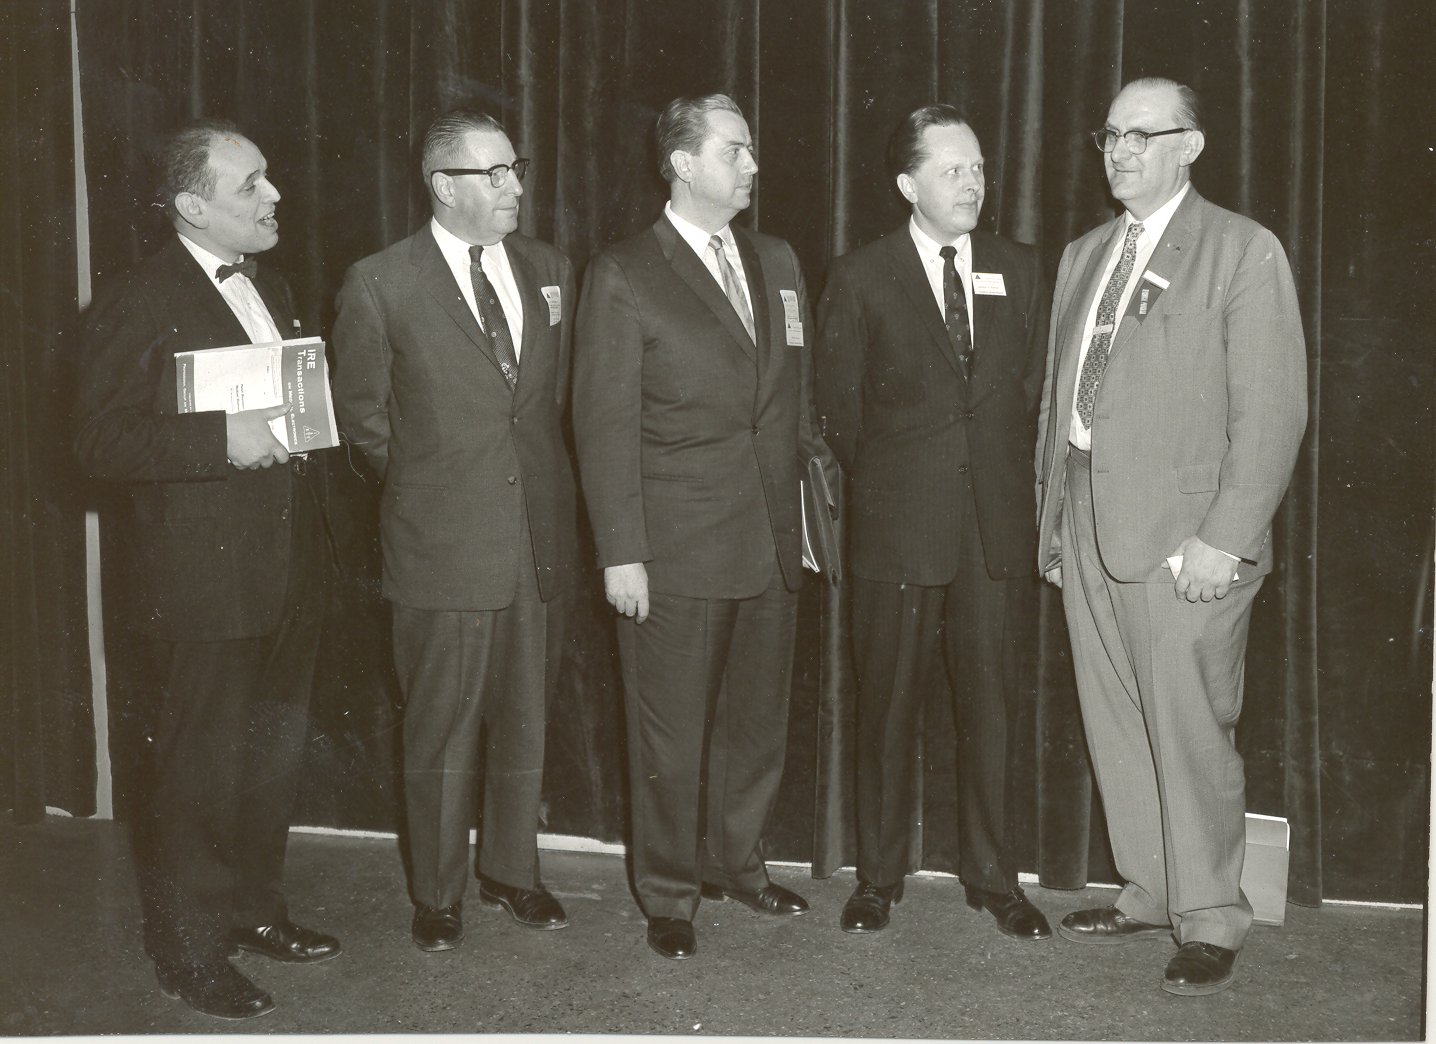 Otto Schmitt (far right), Herman Schwan (Second from right), Walter Rosenblith (far left)